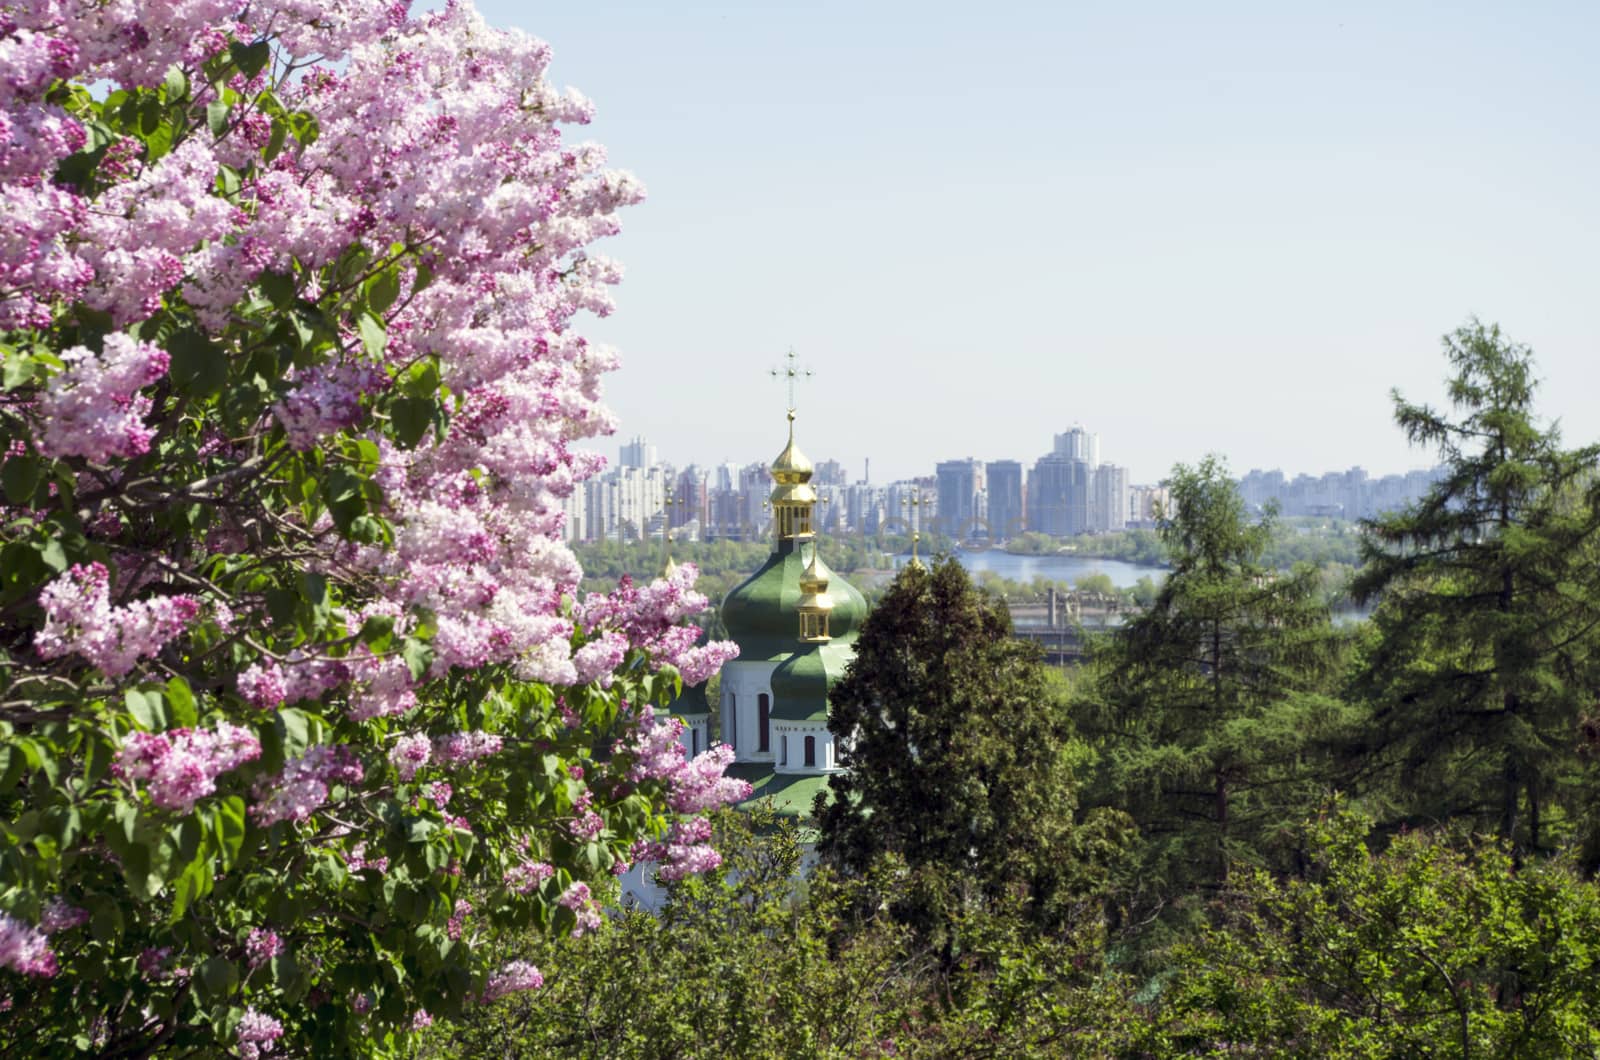 blooming lilacs in the botanical garden, Kiev, Ukraine by dolnikow